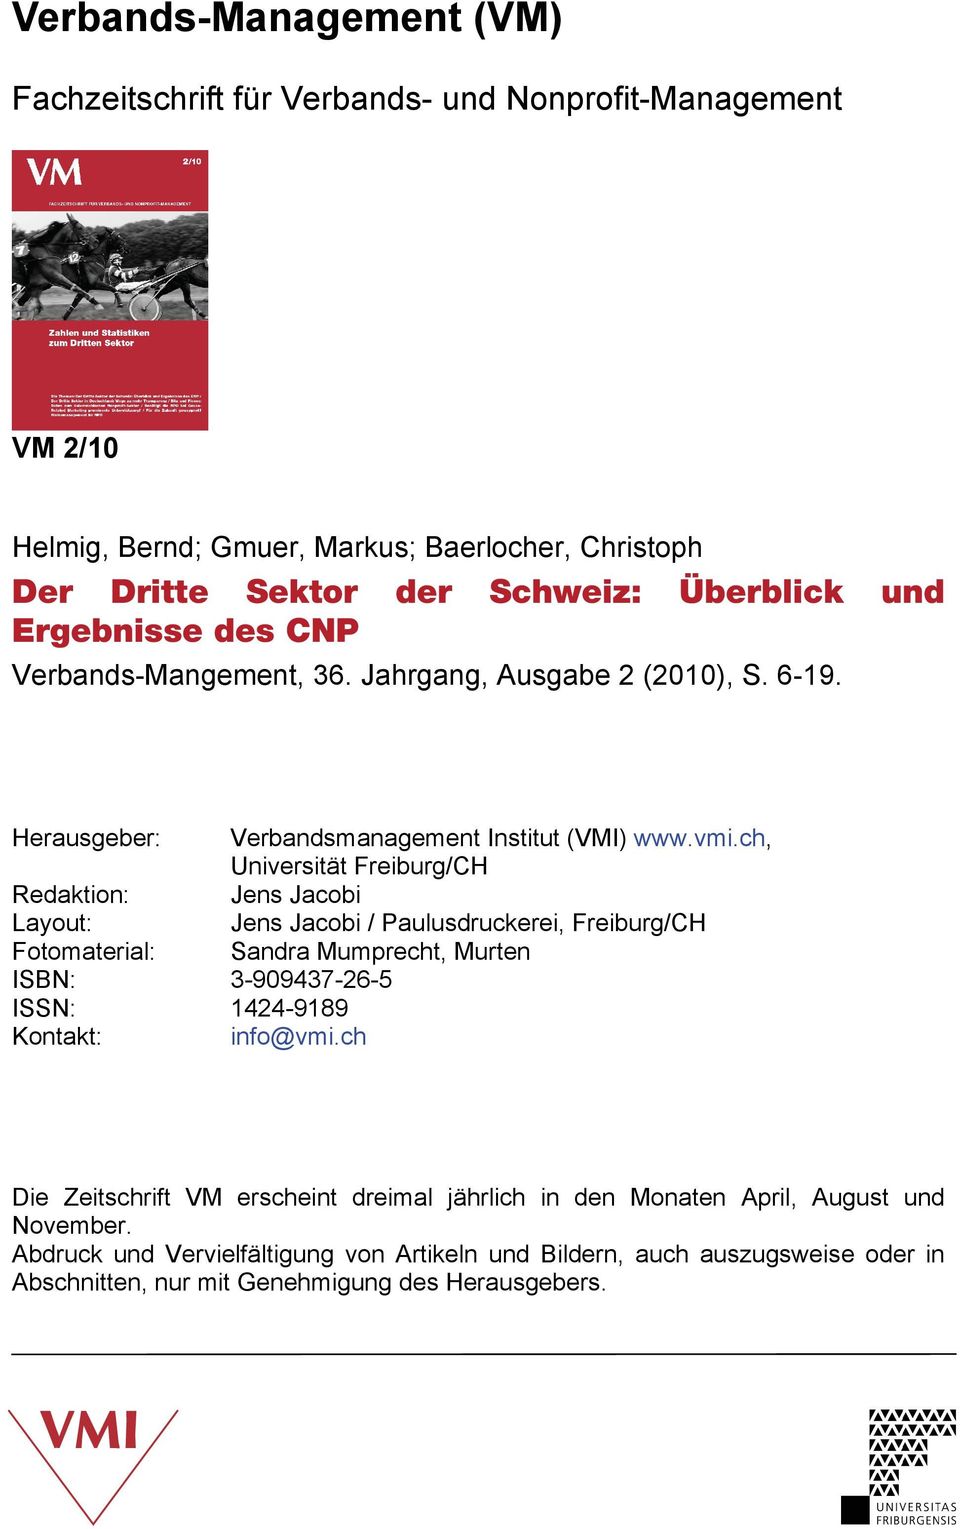 ch, Universität Freiburg/CH Redaktion: Jens Jacobi Layout: Jens Jacobi / Paulusdruckerei, Freiburg/CH Fotomaterial: Sandra Mumprecht, Murten ISBN: 3-909437-26-5 ISSN: 1424-9189